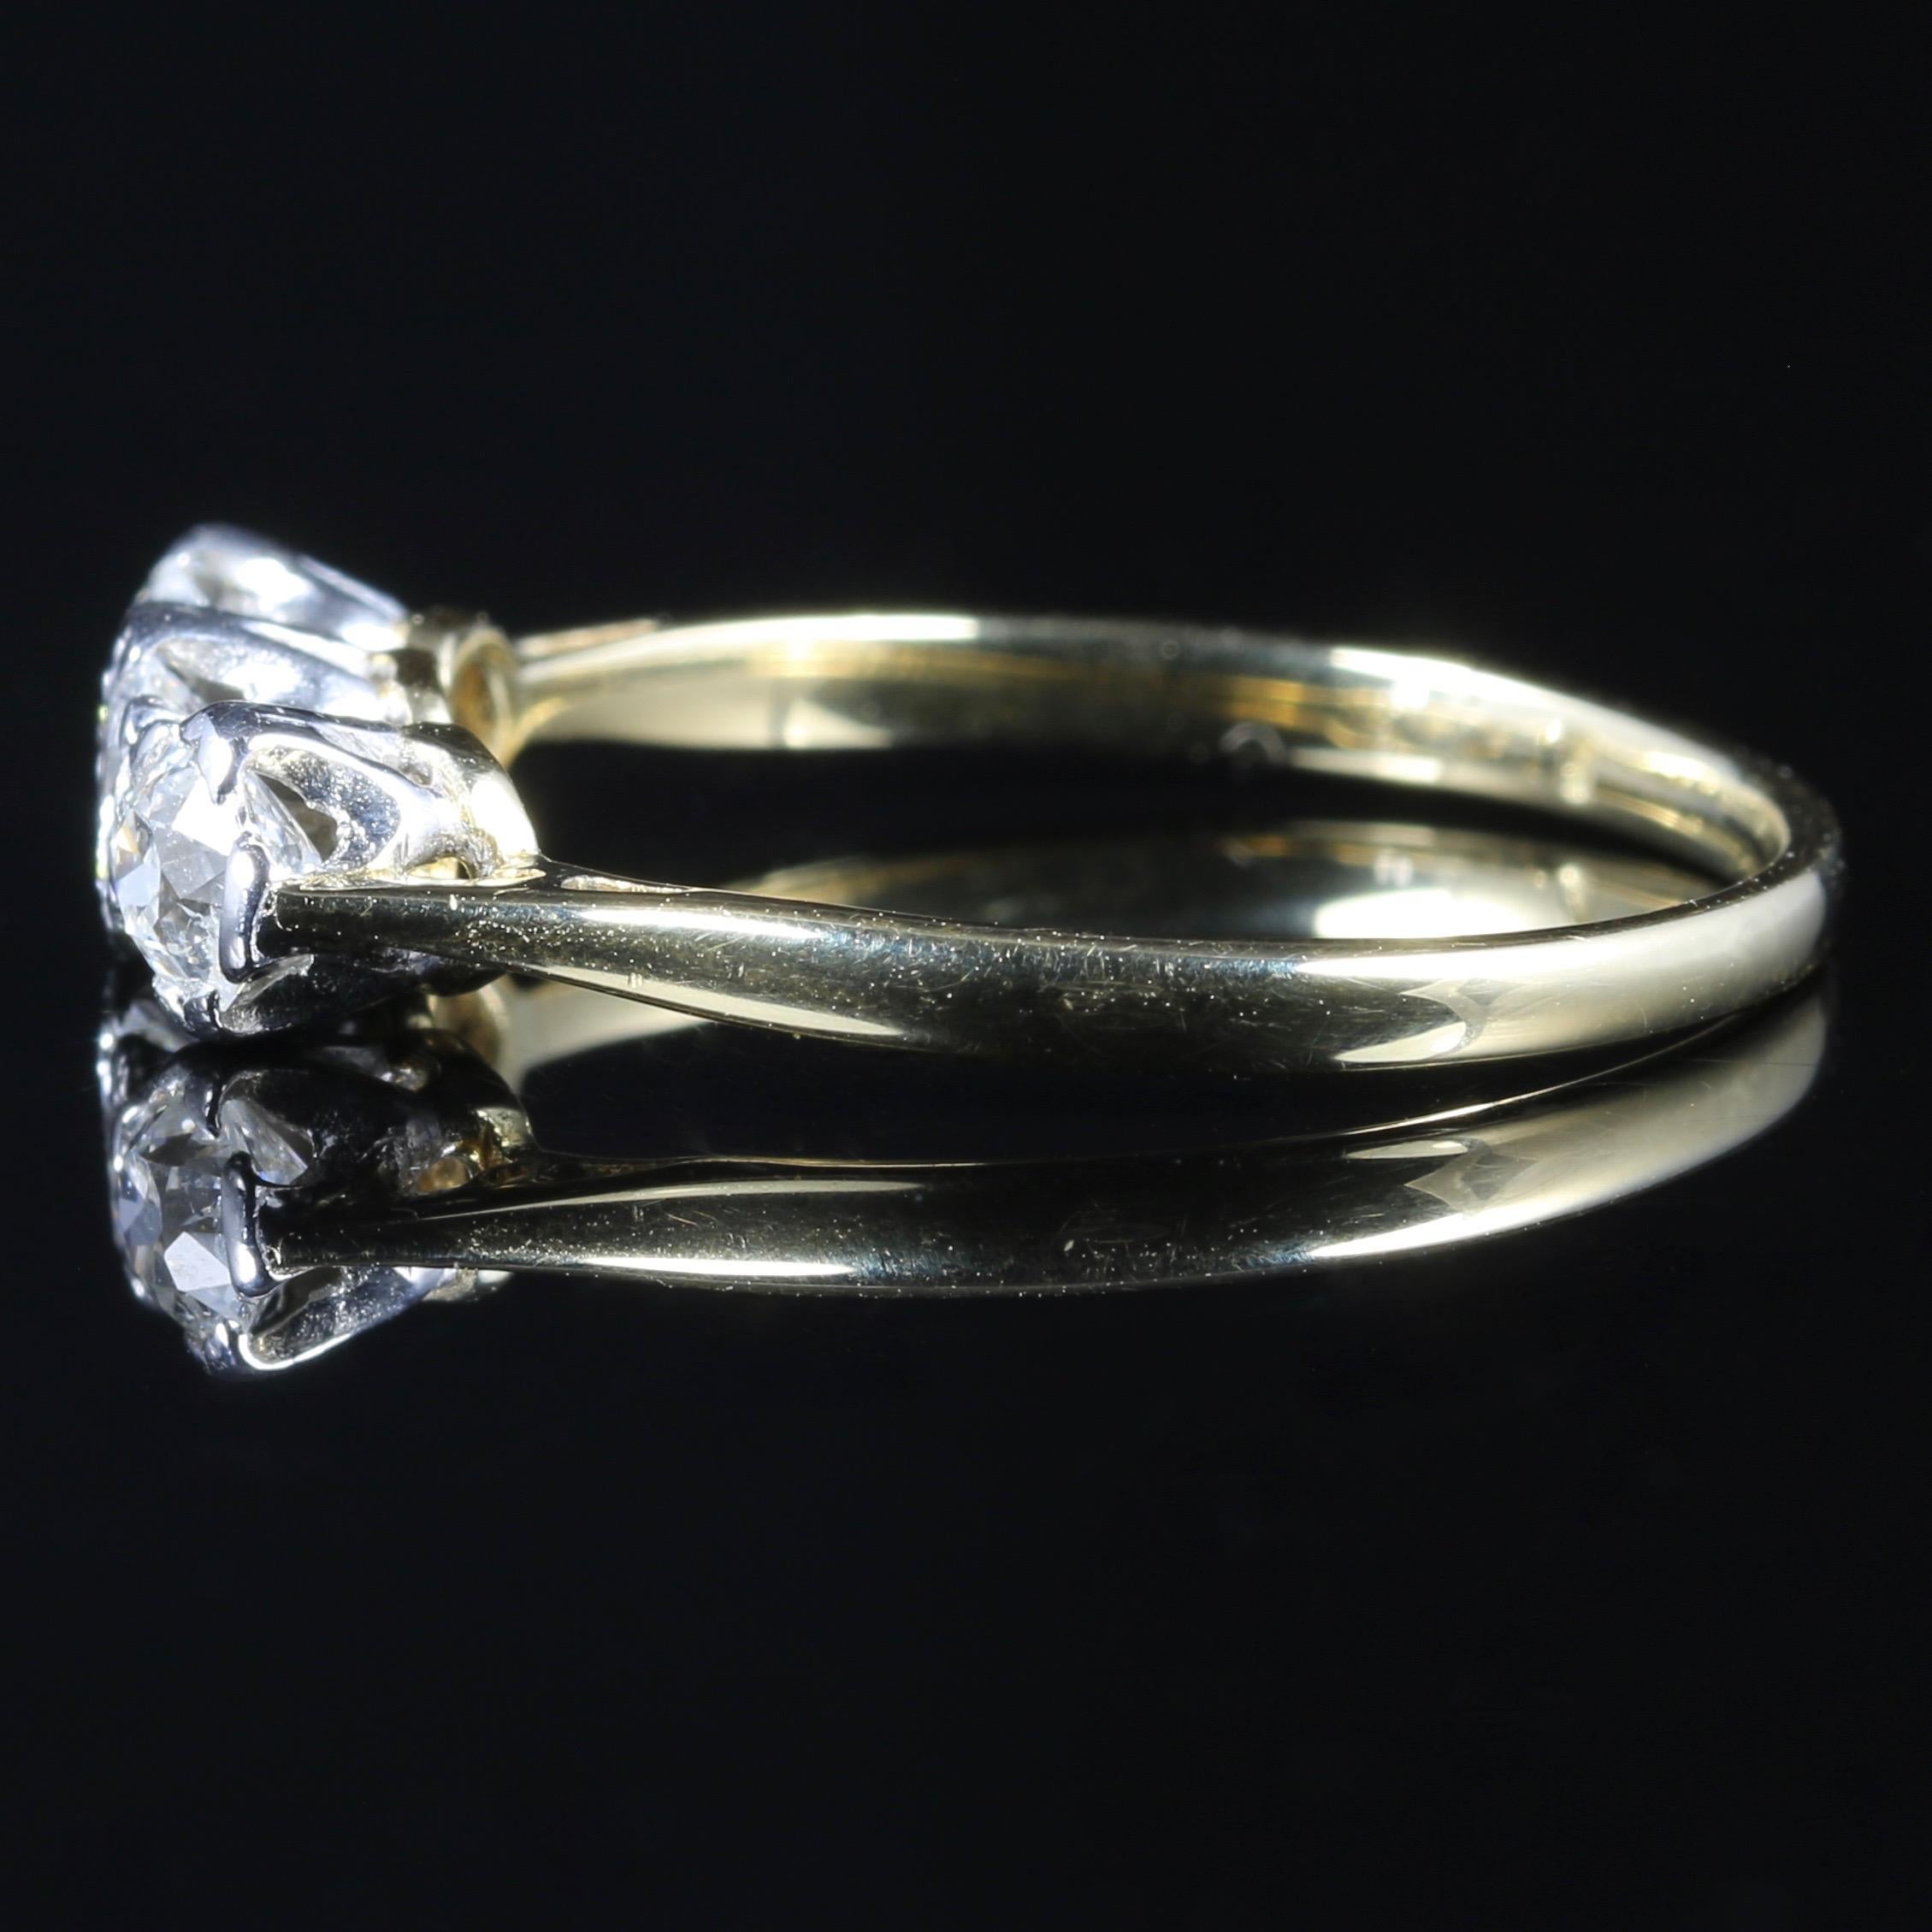 Antique Edwardian Diamond Trilogy Ring circa 1915 Gold Plat 1